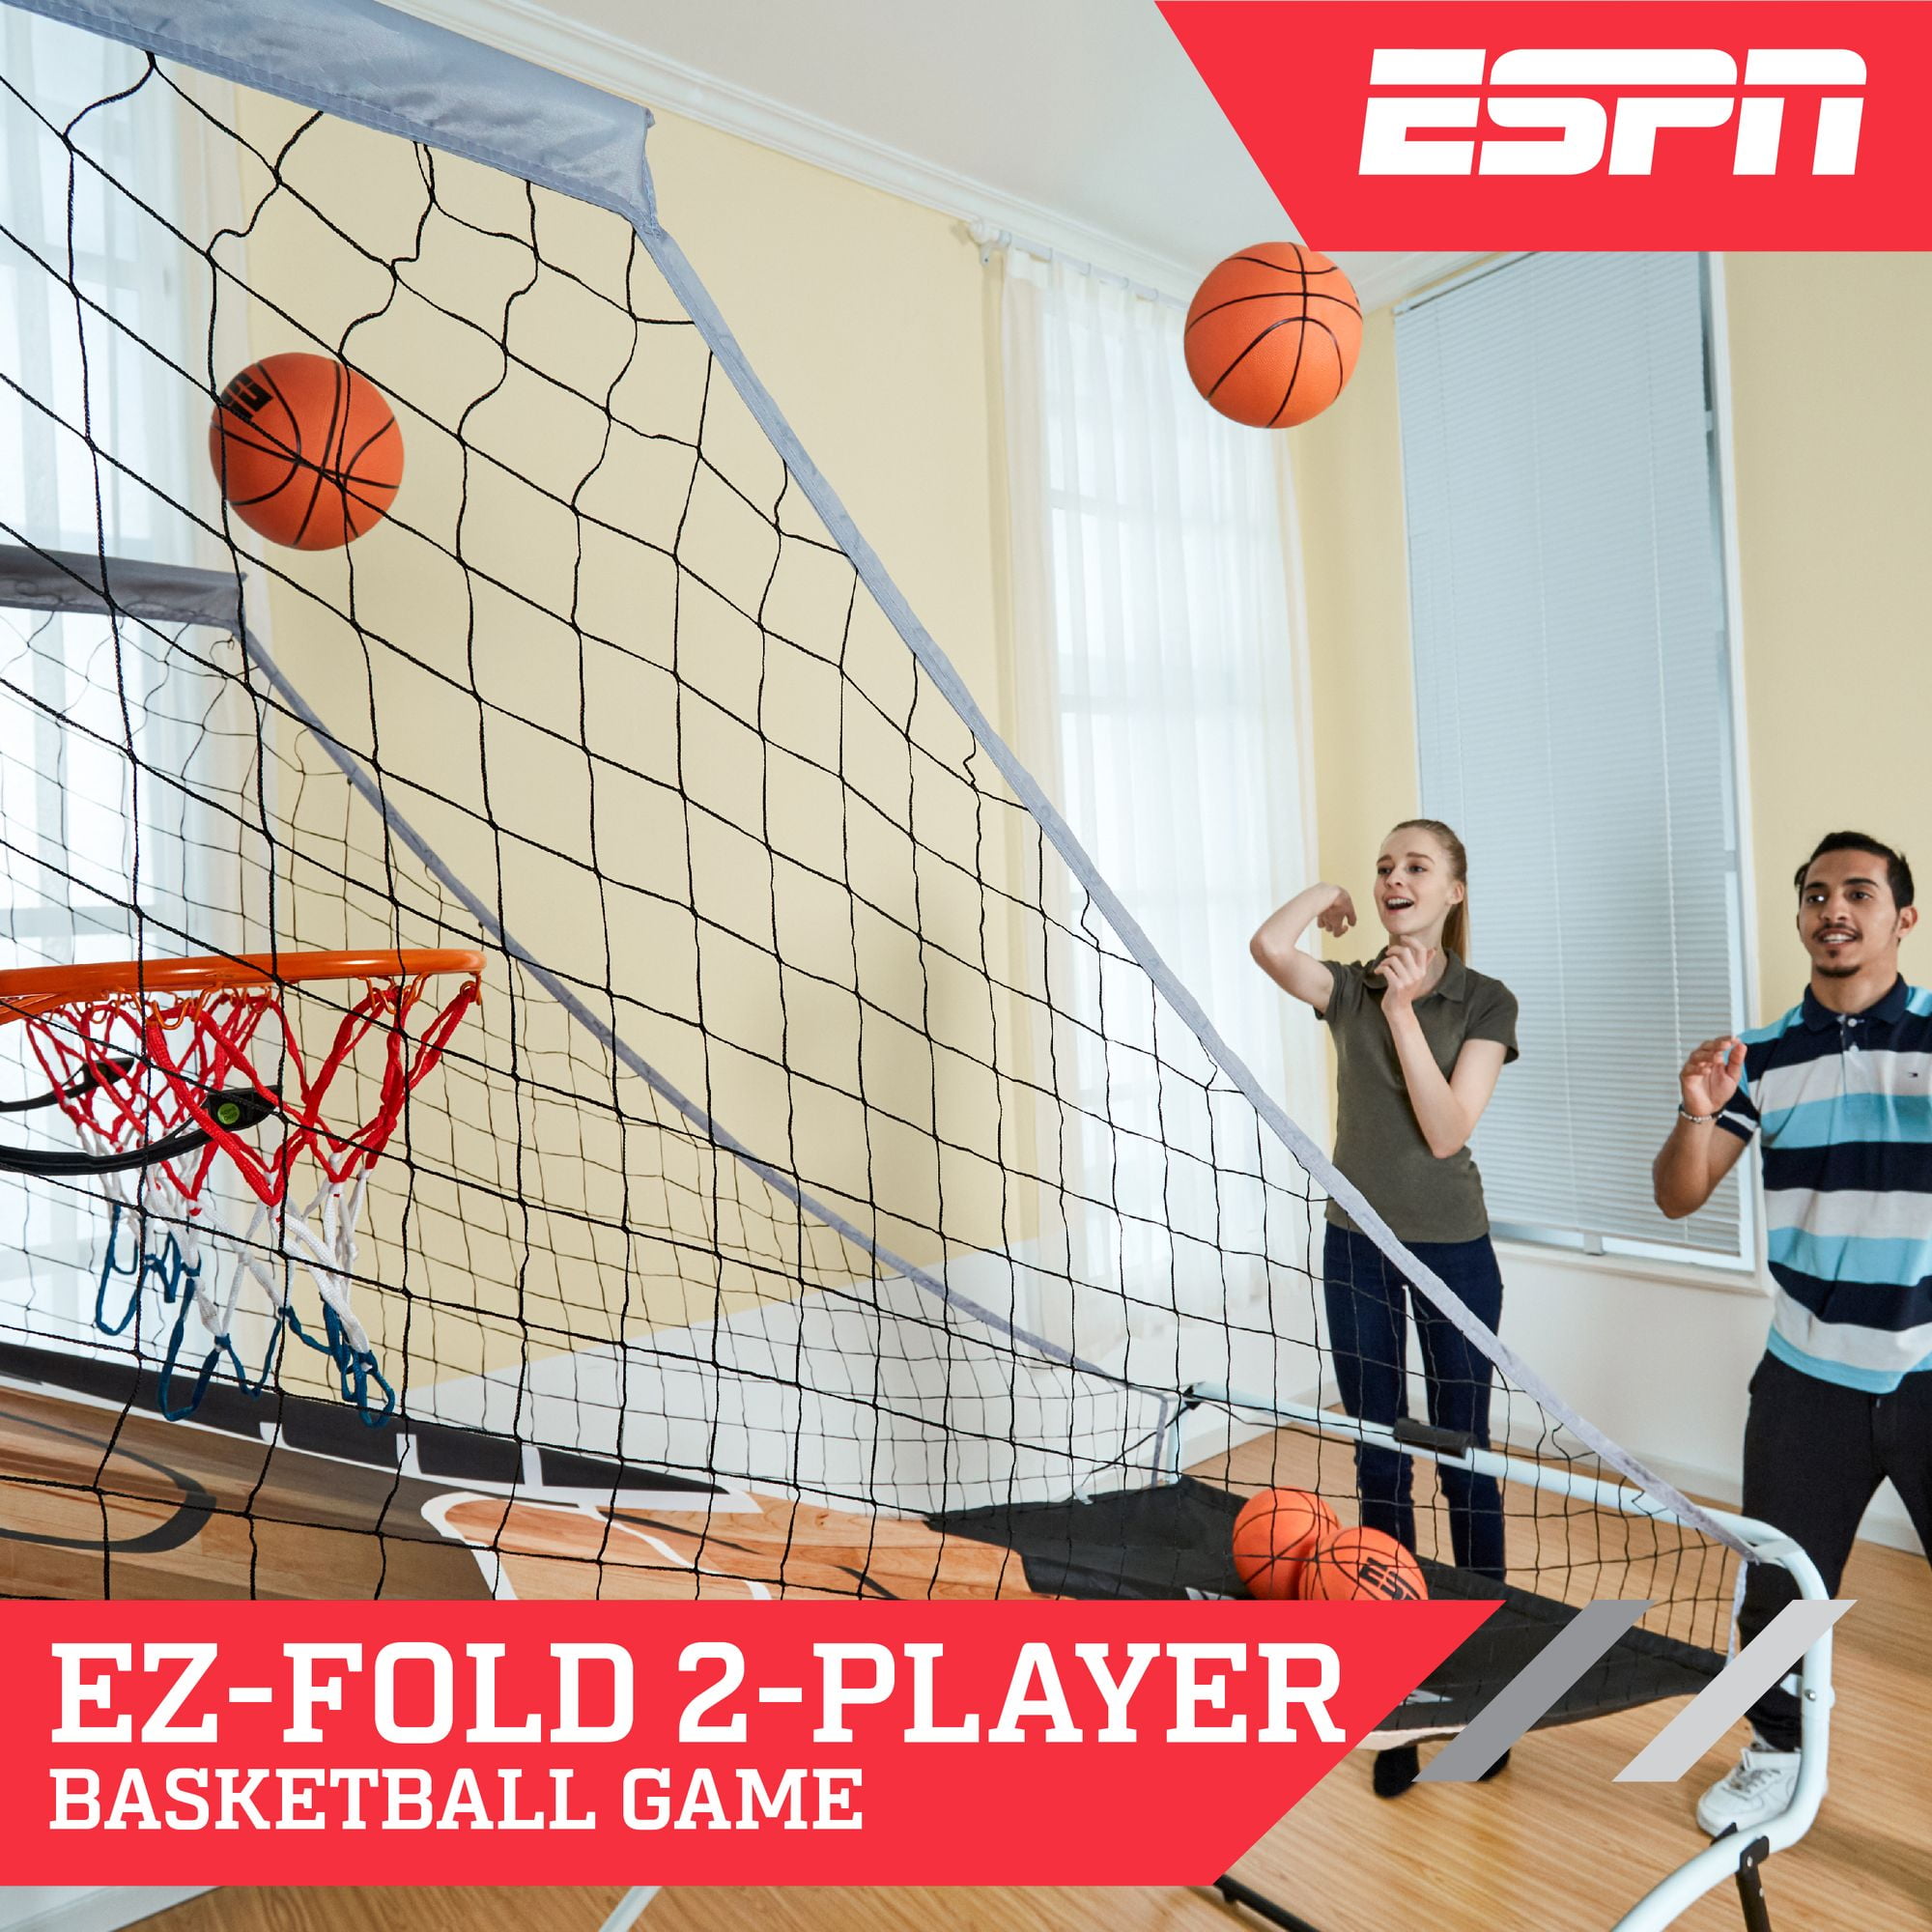 ESPN Arcade Basketball Game Foldable LED Electronic Scoring System 2-Player 